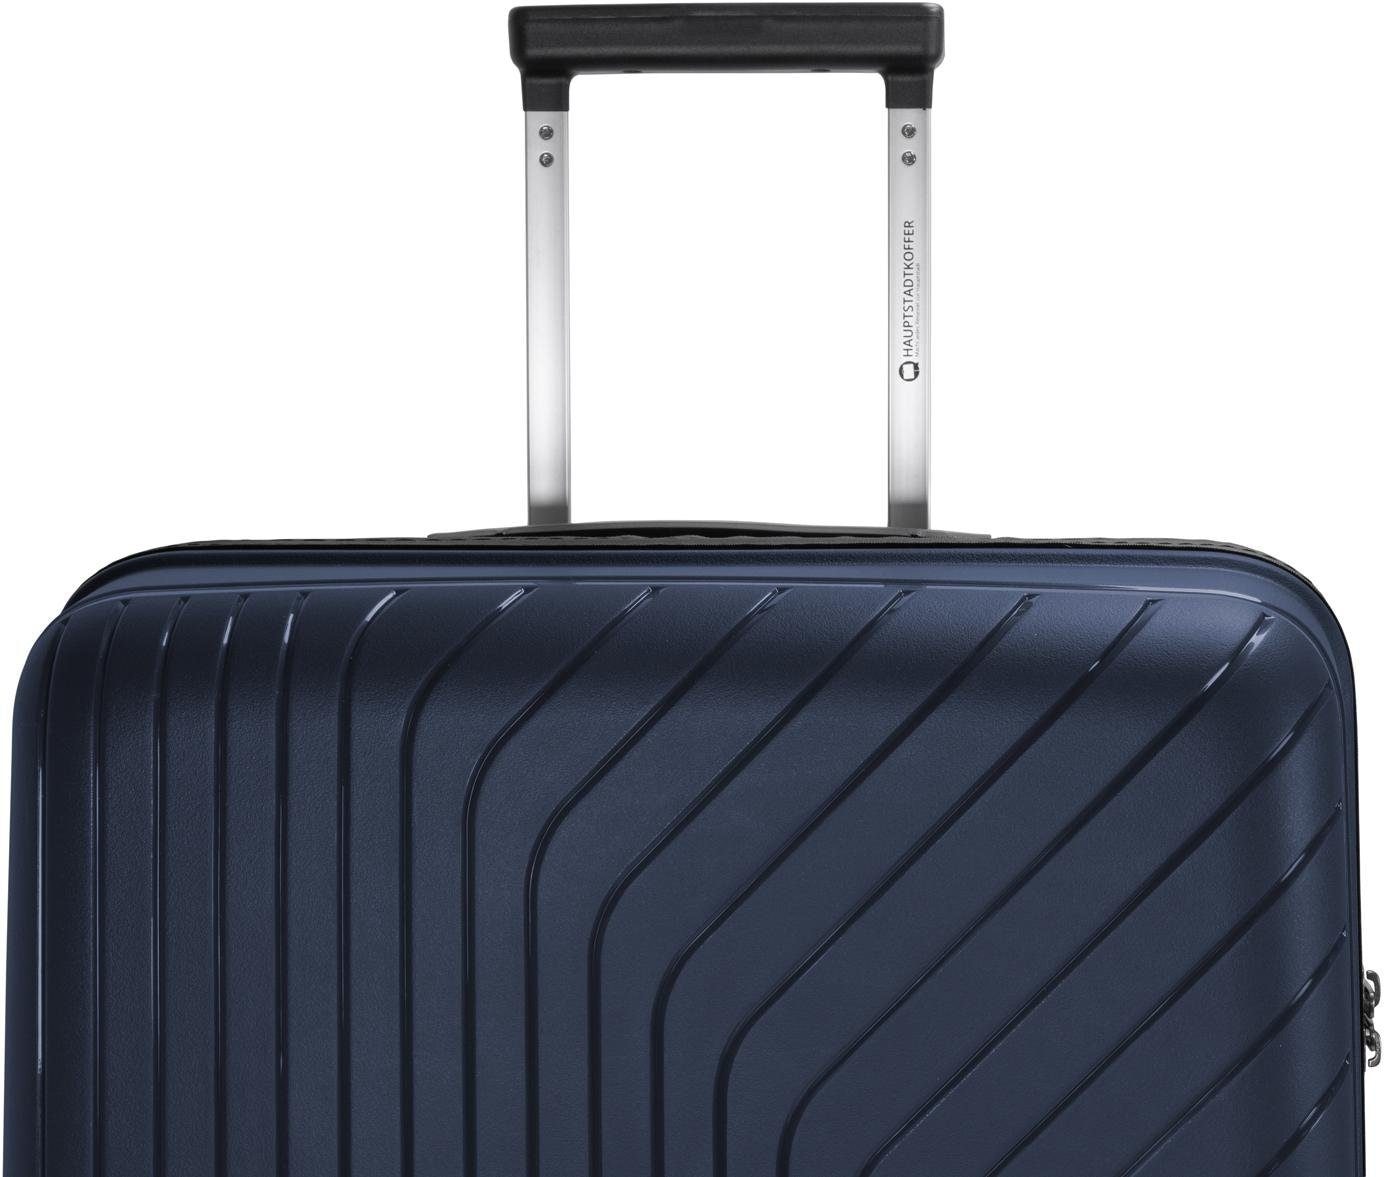 Hauptstadtkoffer Hartschalen-Trolley »TXL, 66 cm, dunkelblau«, 4 Rollen, Hartschalen-Koffer Koffer mittel gross Reisegepäck TSA Schloss